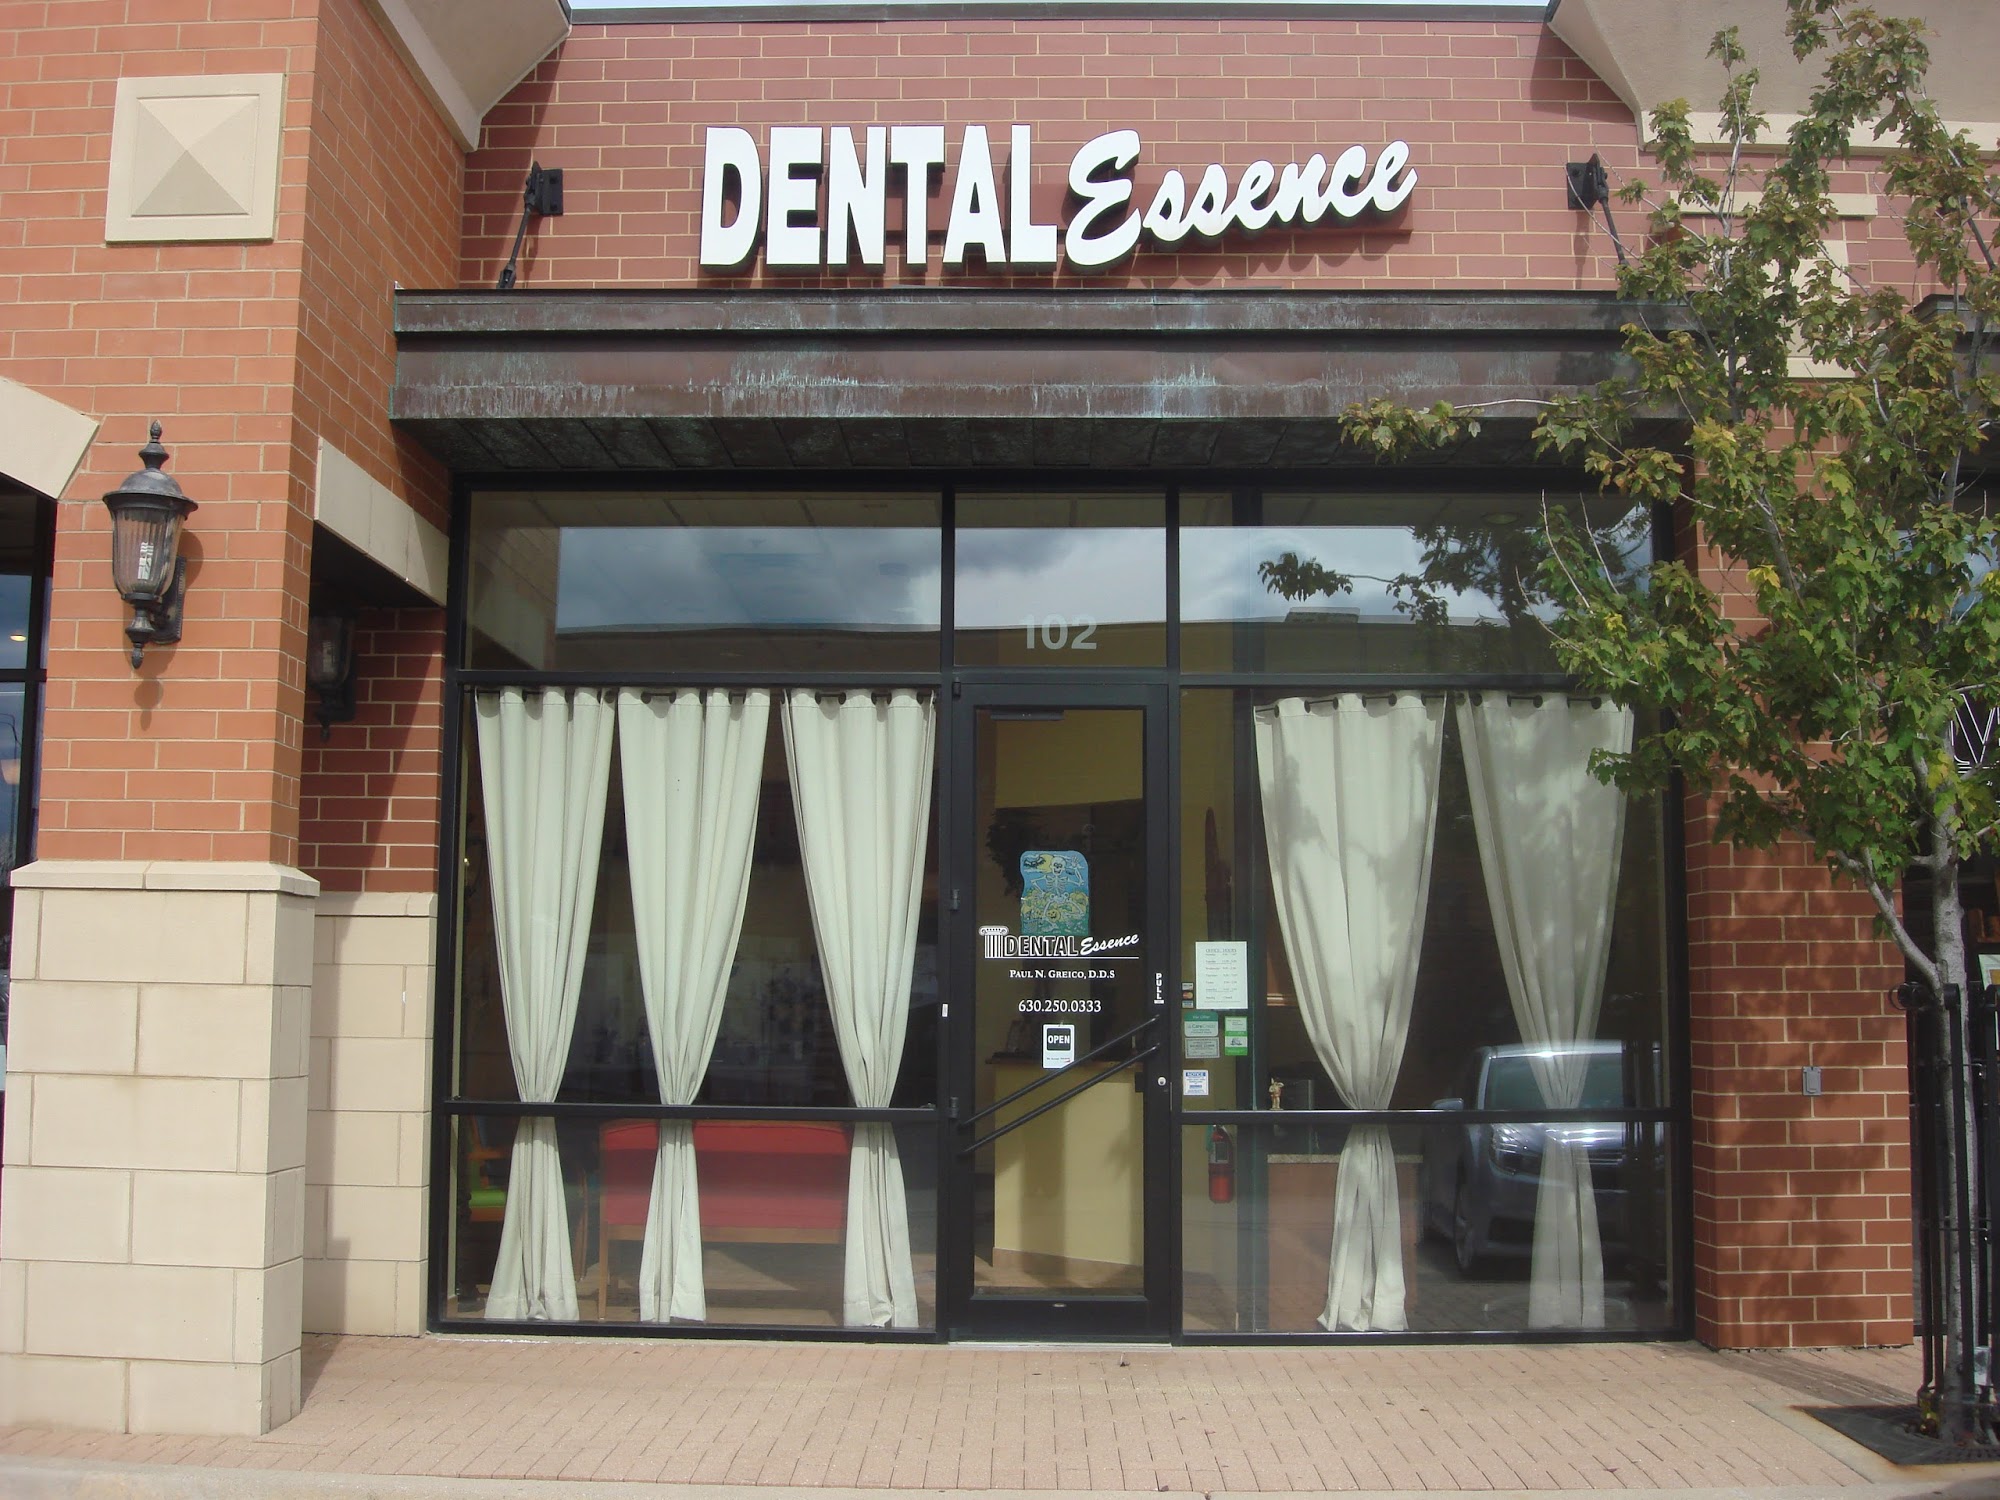 Dental Essence